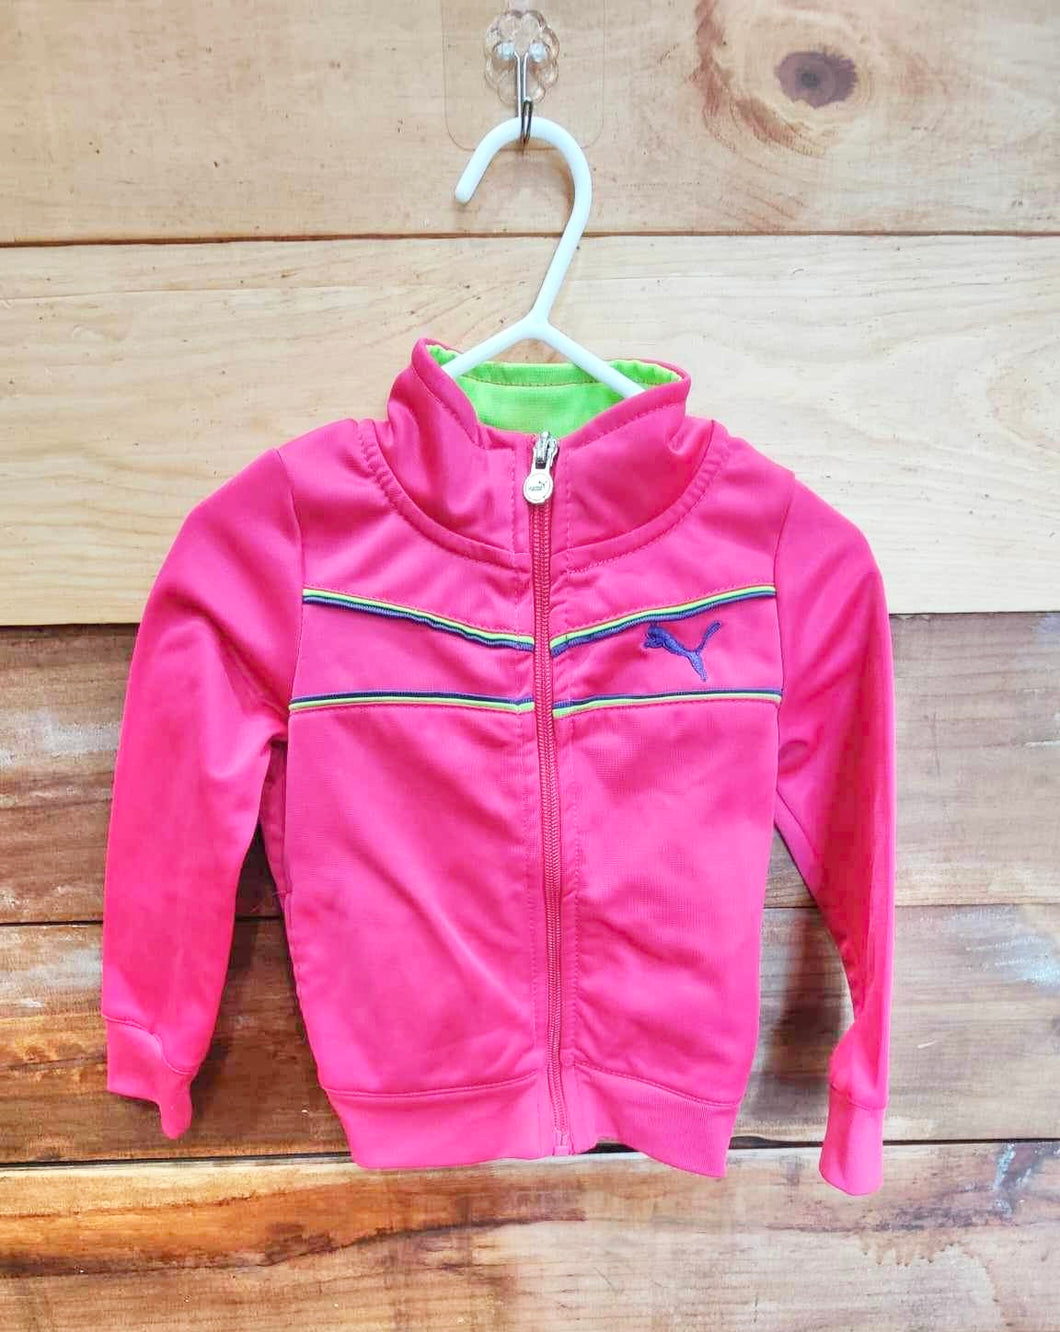 Puma Pink Jacket Size 2T